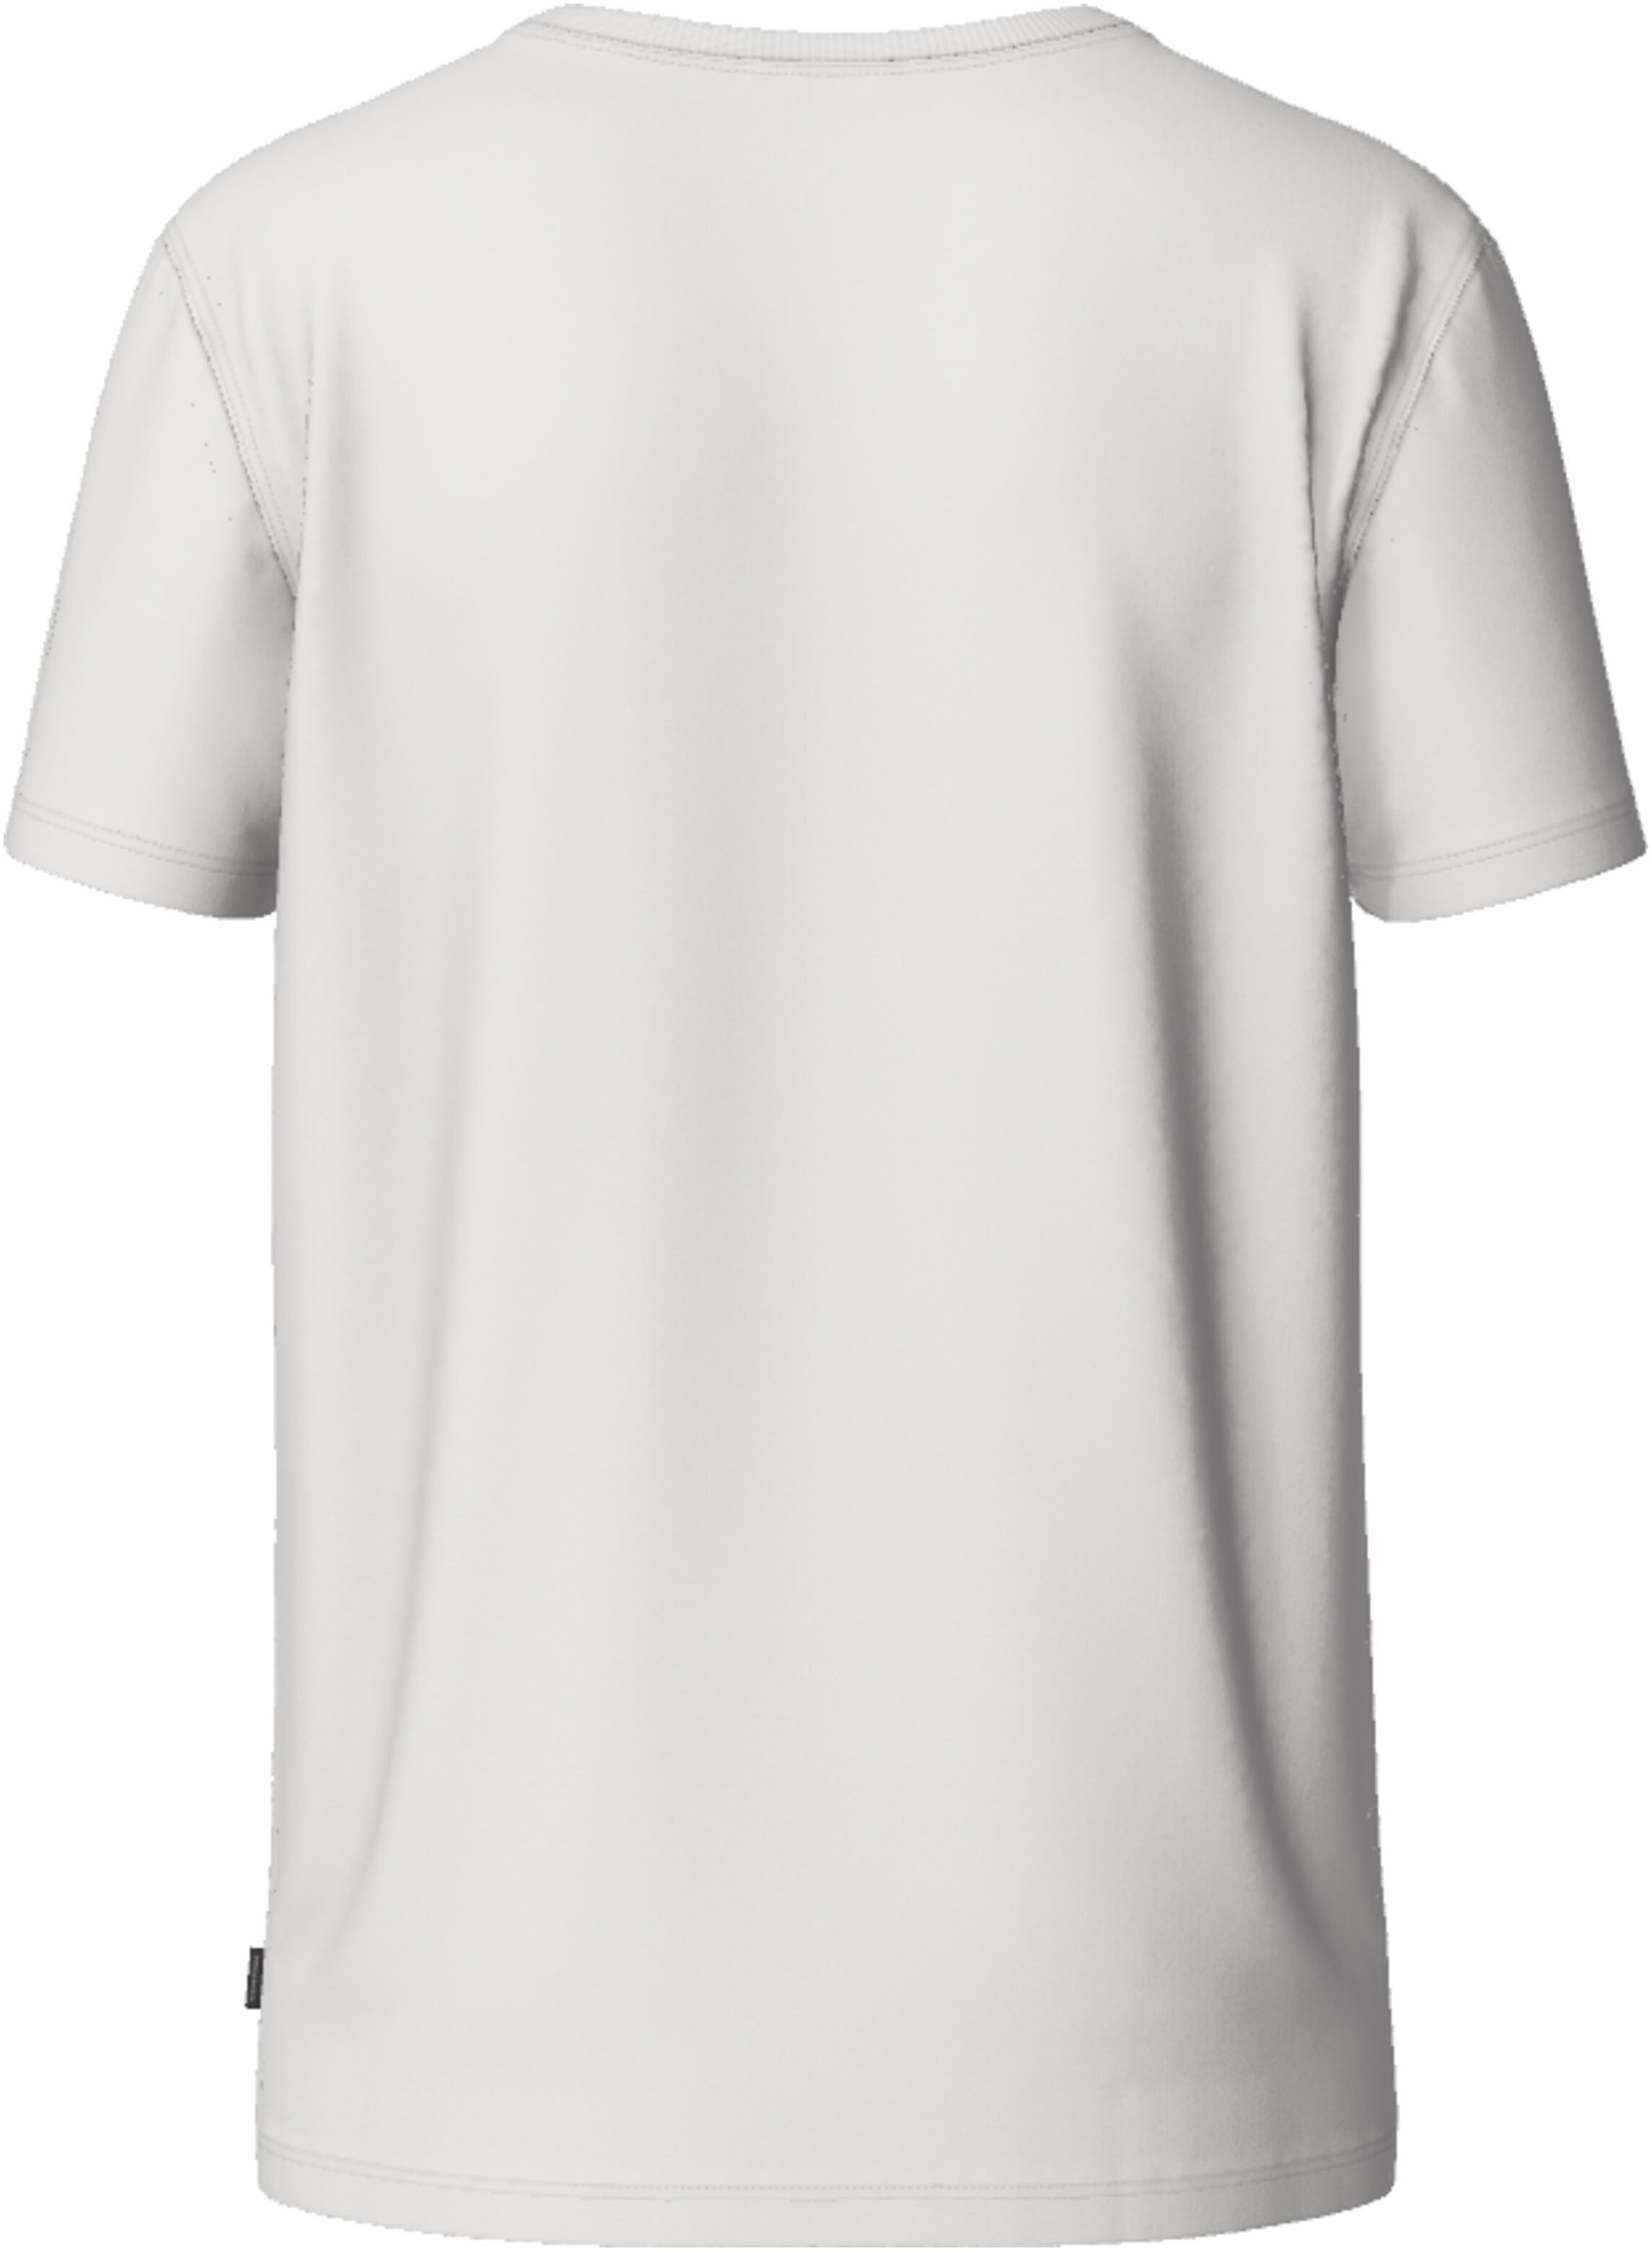 T-Shirt OTTO shoppen online Chiemsee bei